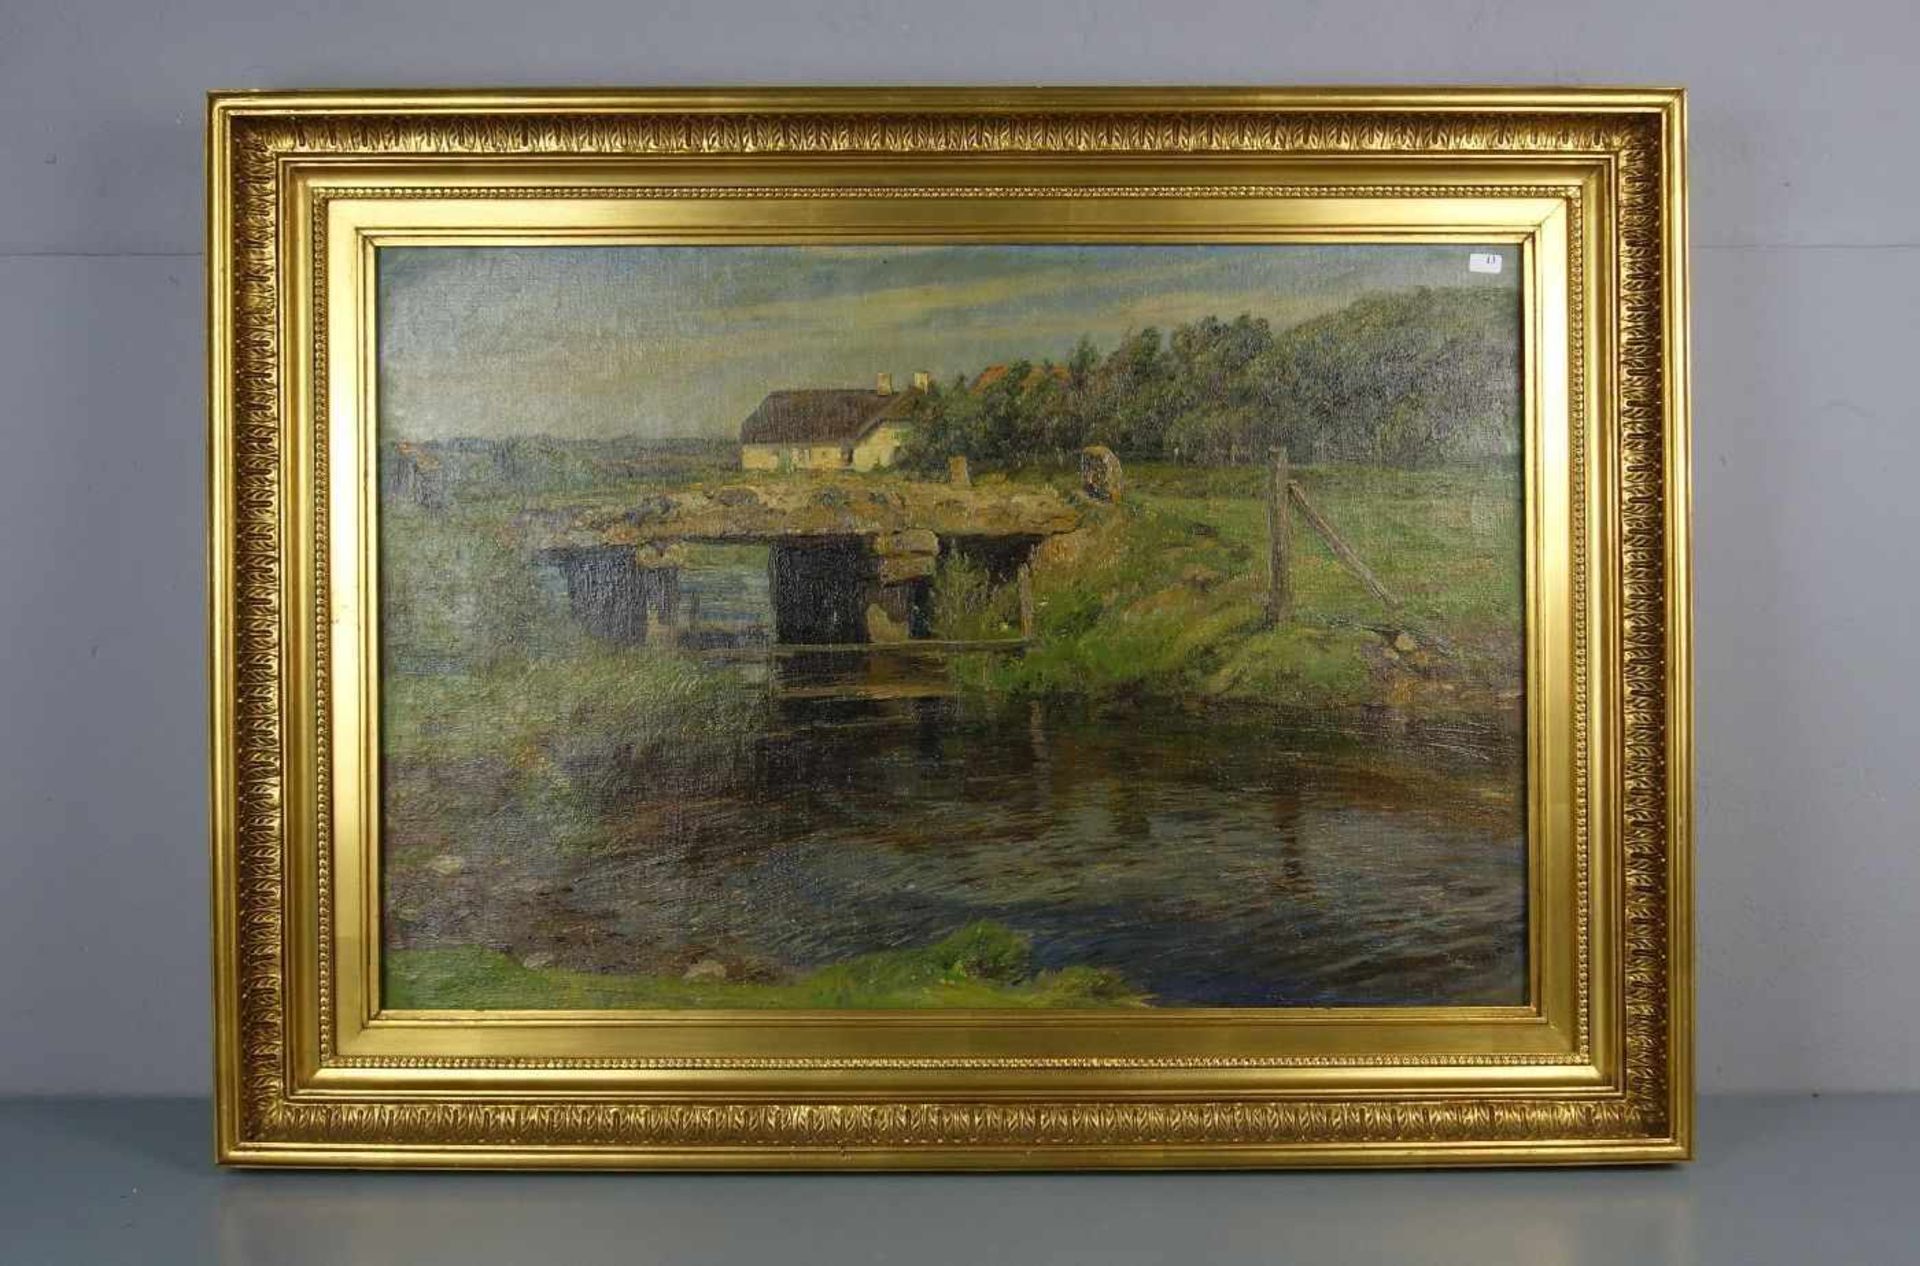 LARSEN, KNUD (Knud Erik Larsen, dänischer Maler, 1865-1922), Gemälde / painting: "Landschaft bei